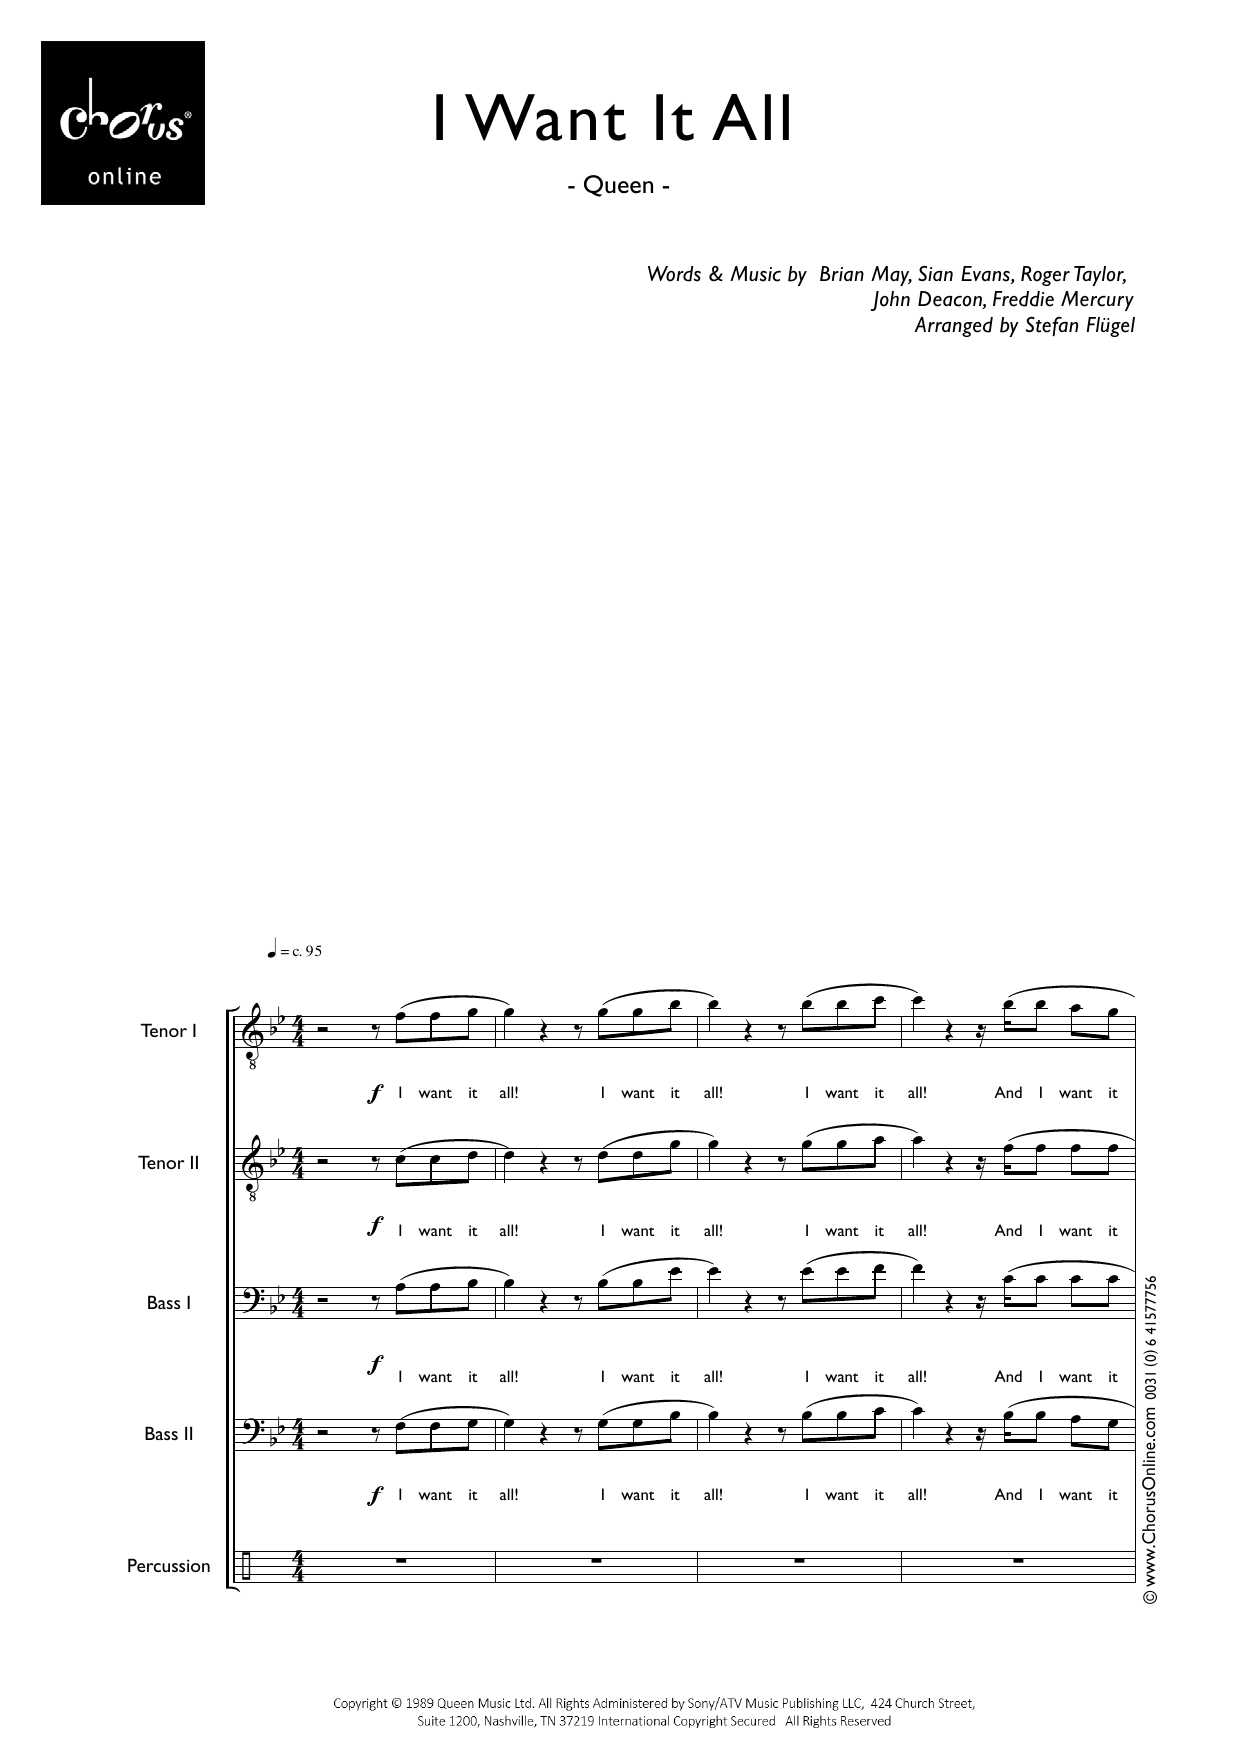 Queen I Want It All (arr. Stefan Flügel) sheet music notes printable PDF score